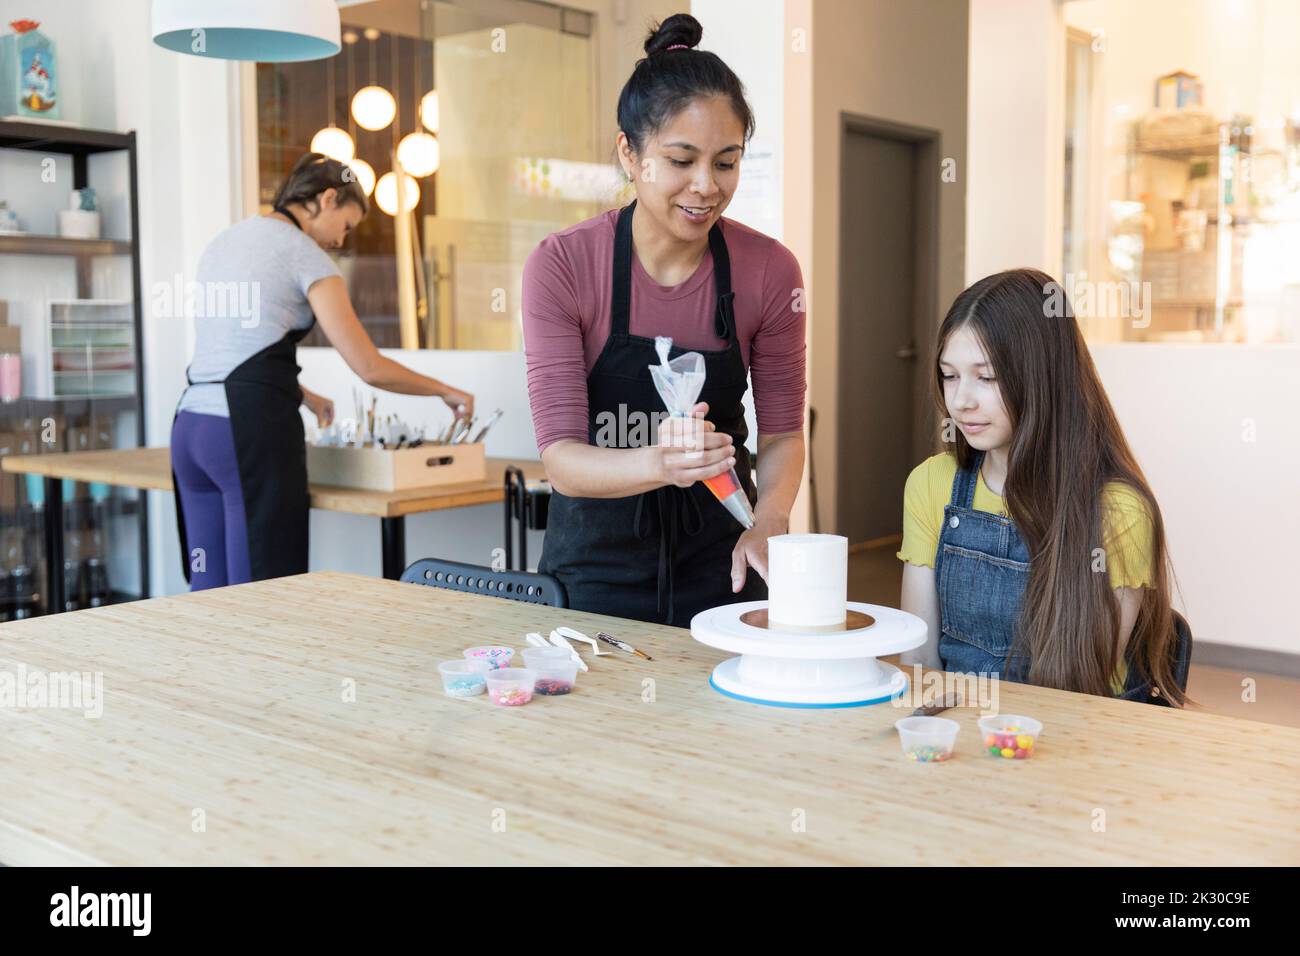 Woman teaching teen girl to decorate cake Stock Photo